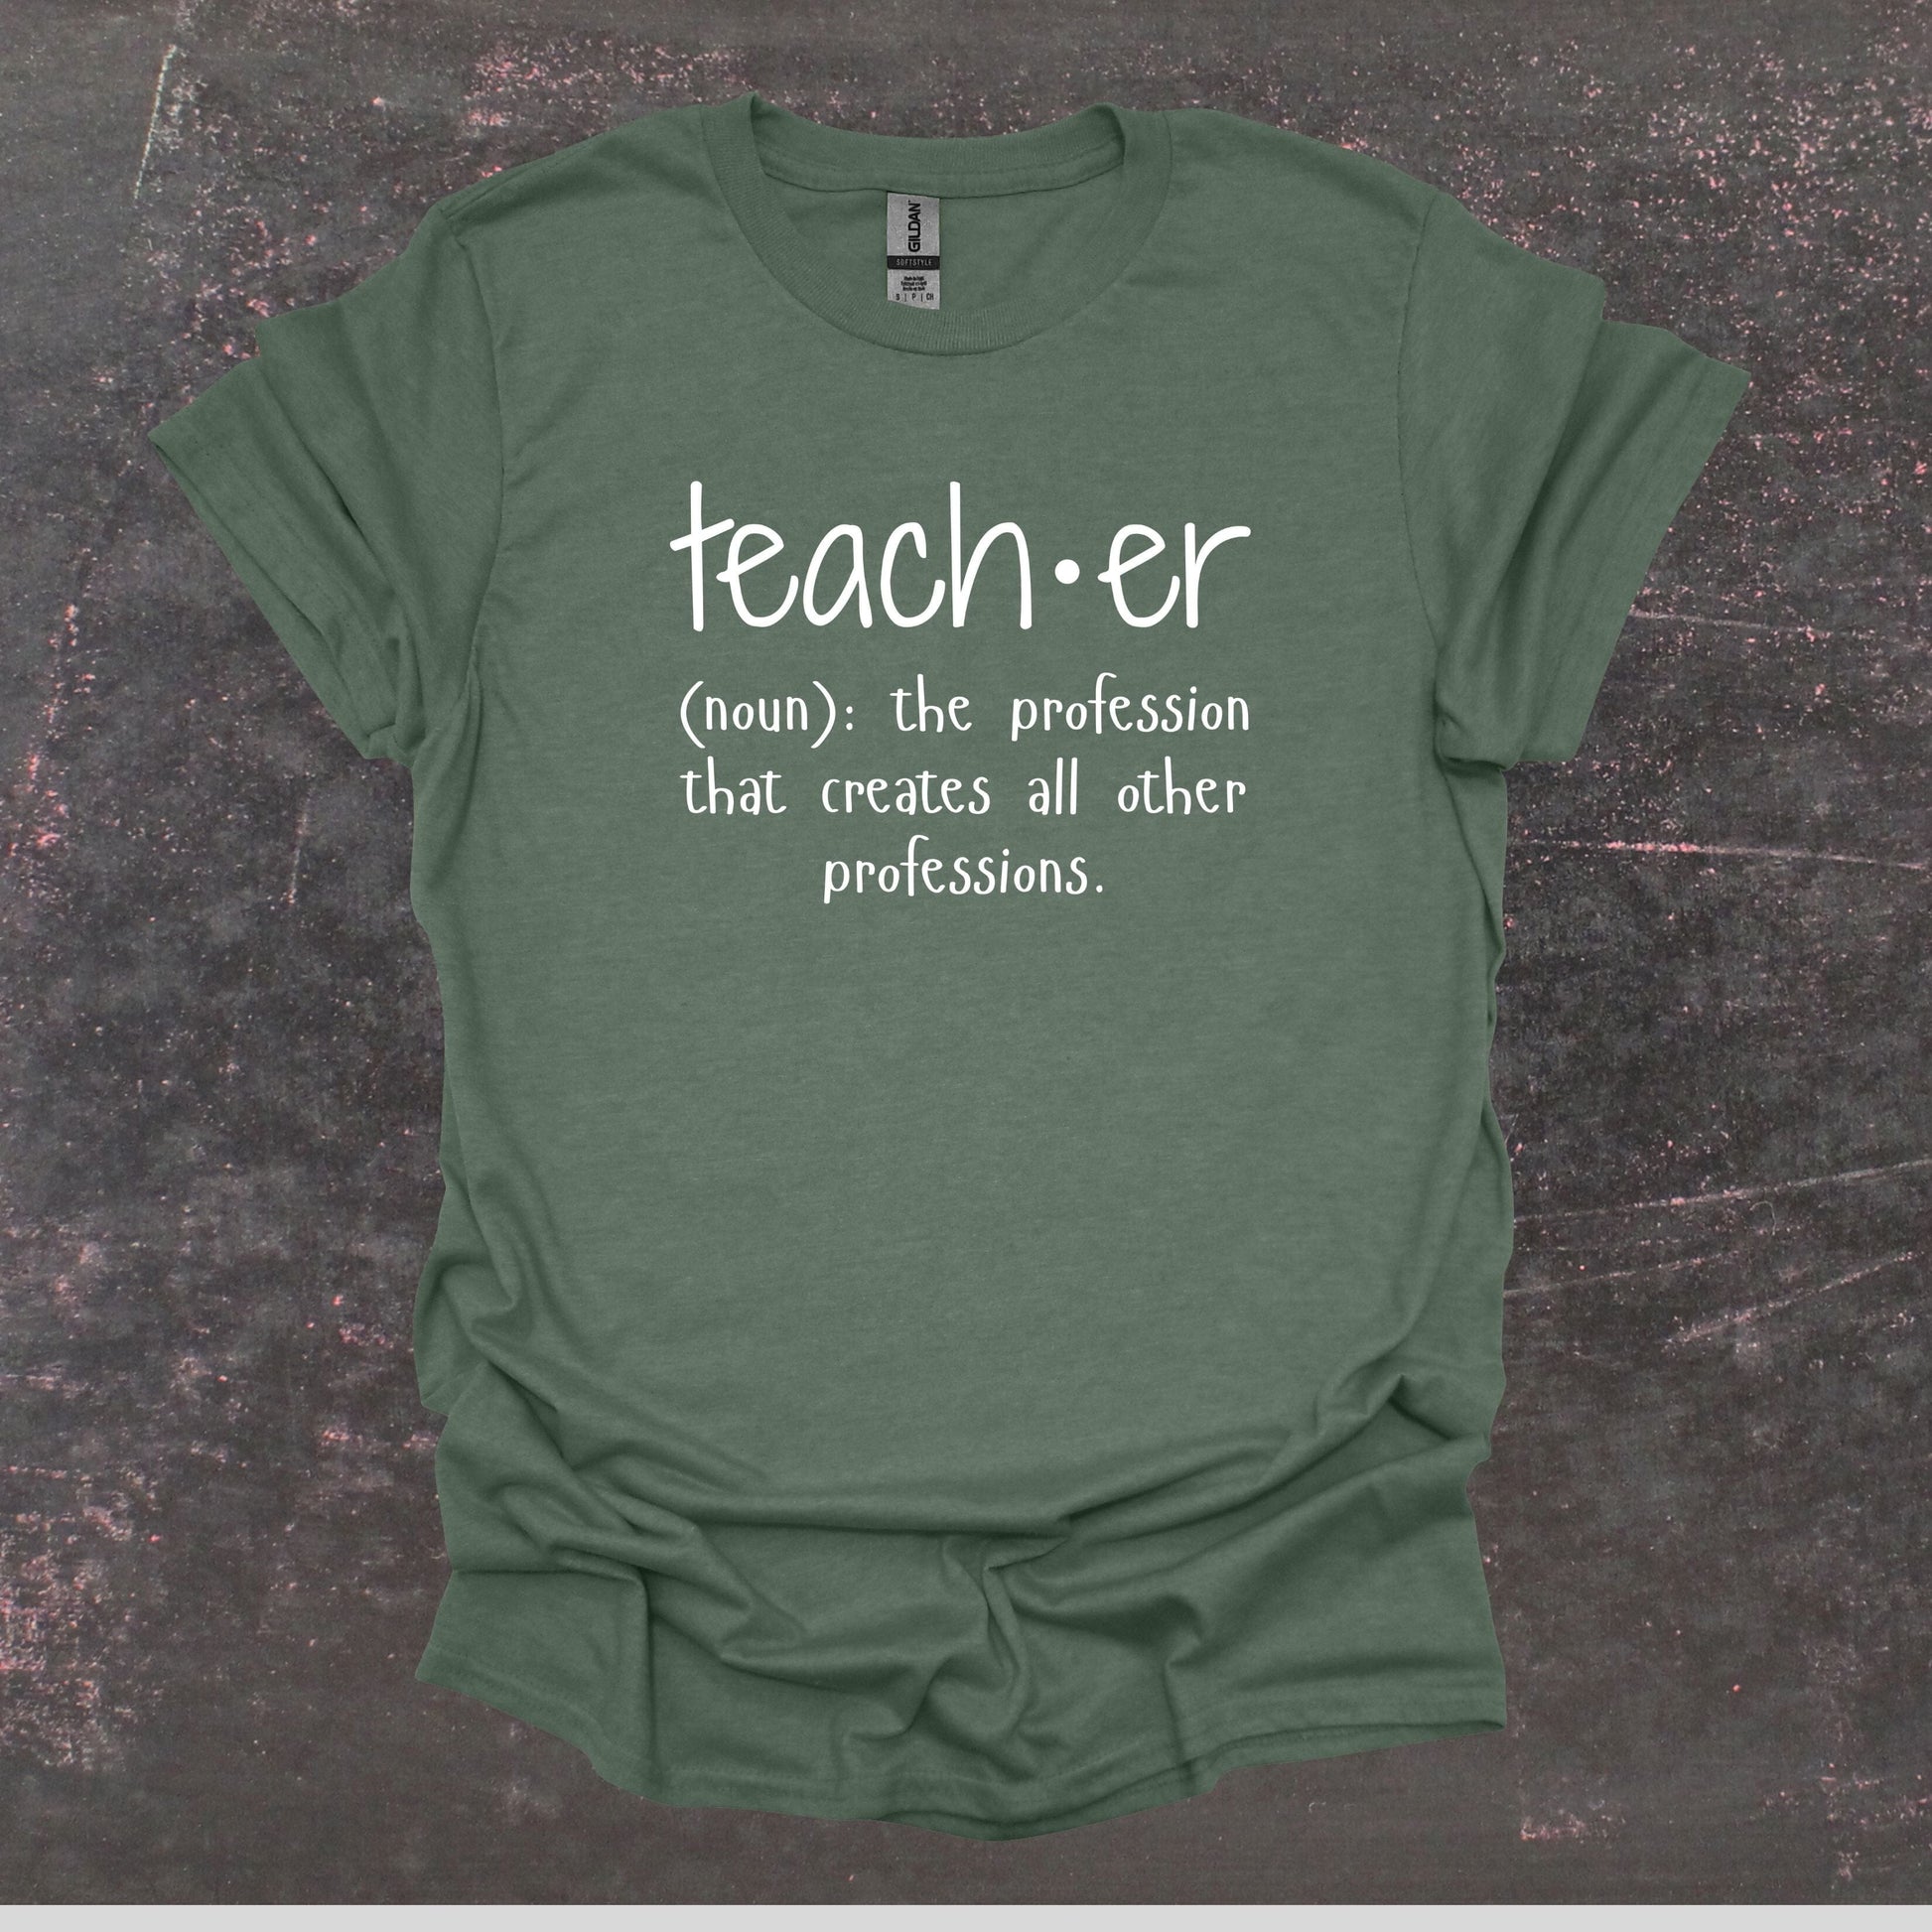 Teacher Definition - Teacher T Shirt - Adult Tee Shirts T-Shirts Graphic Avenue Heather Forest Green Adult Small 